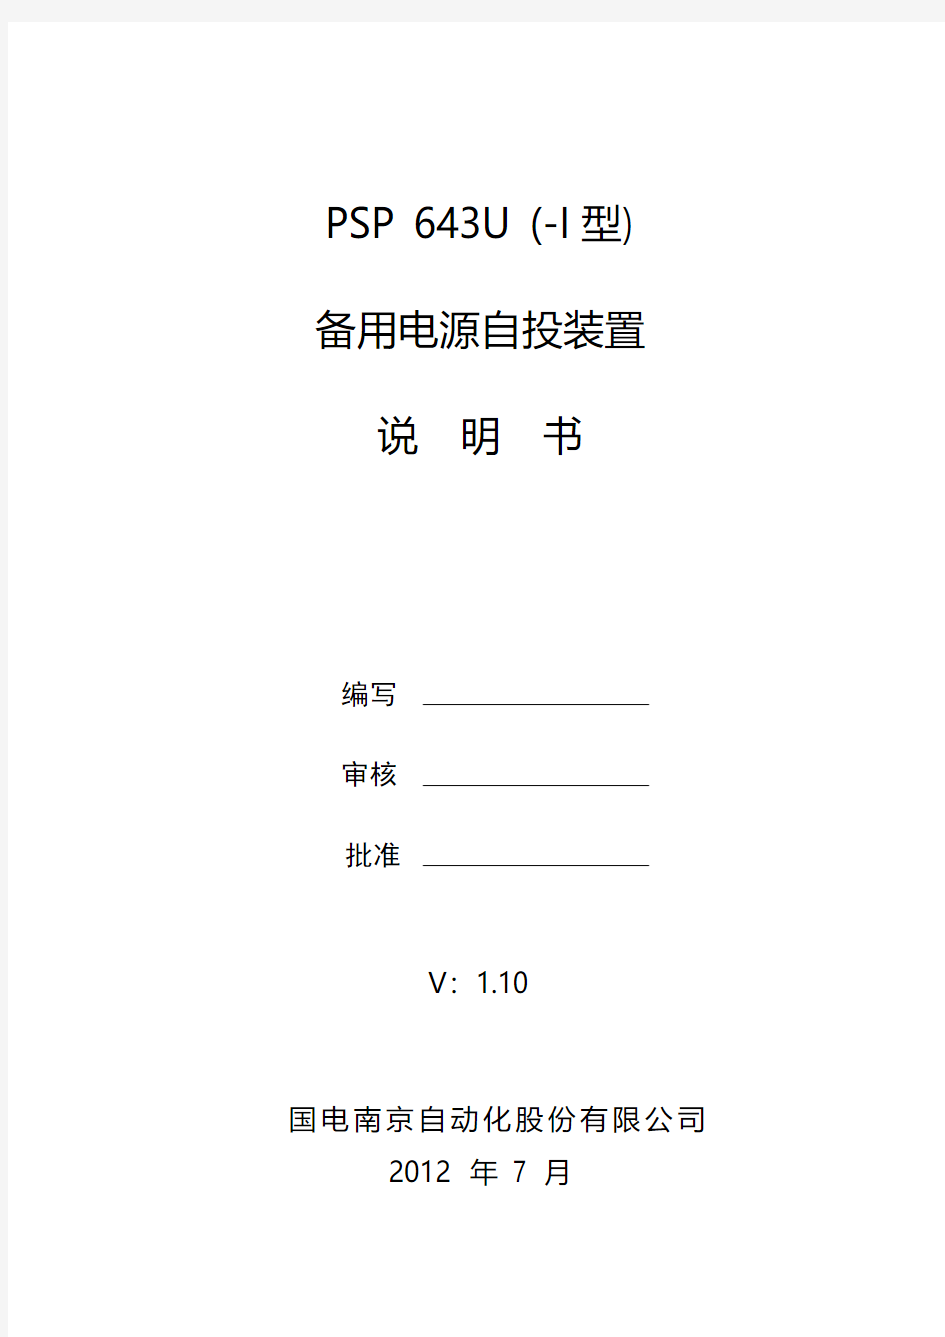 PSP643U(-I型)说明书v1.1